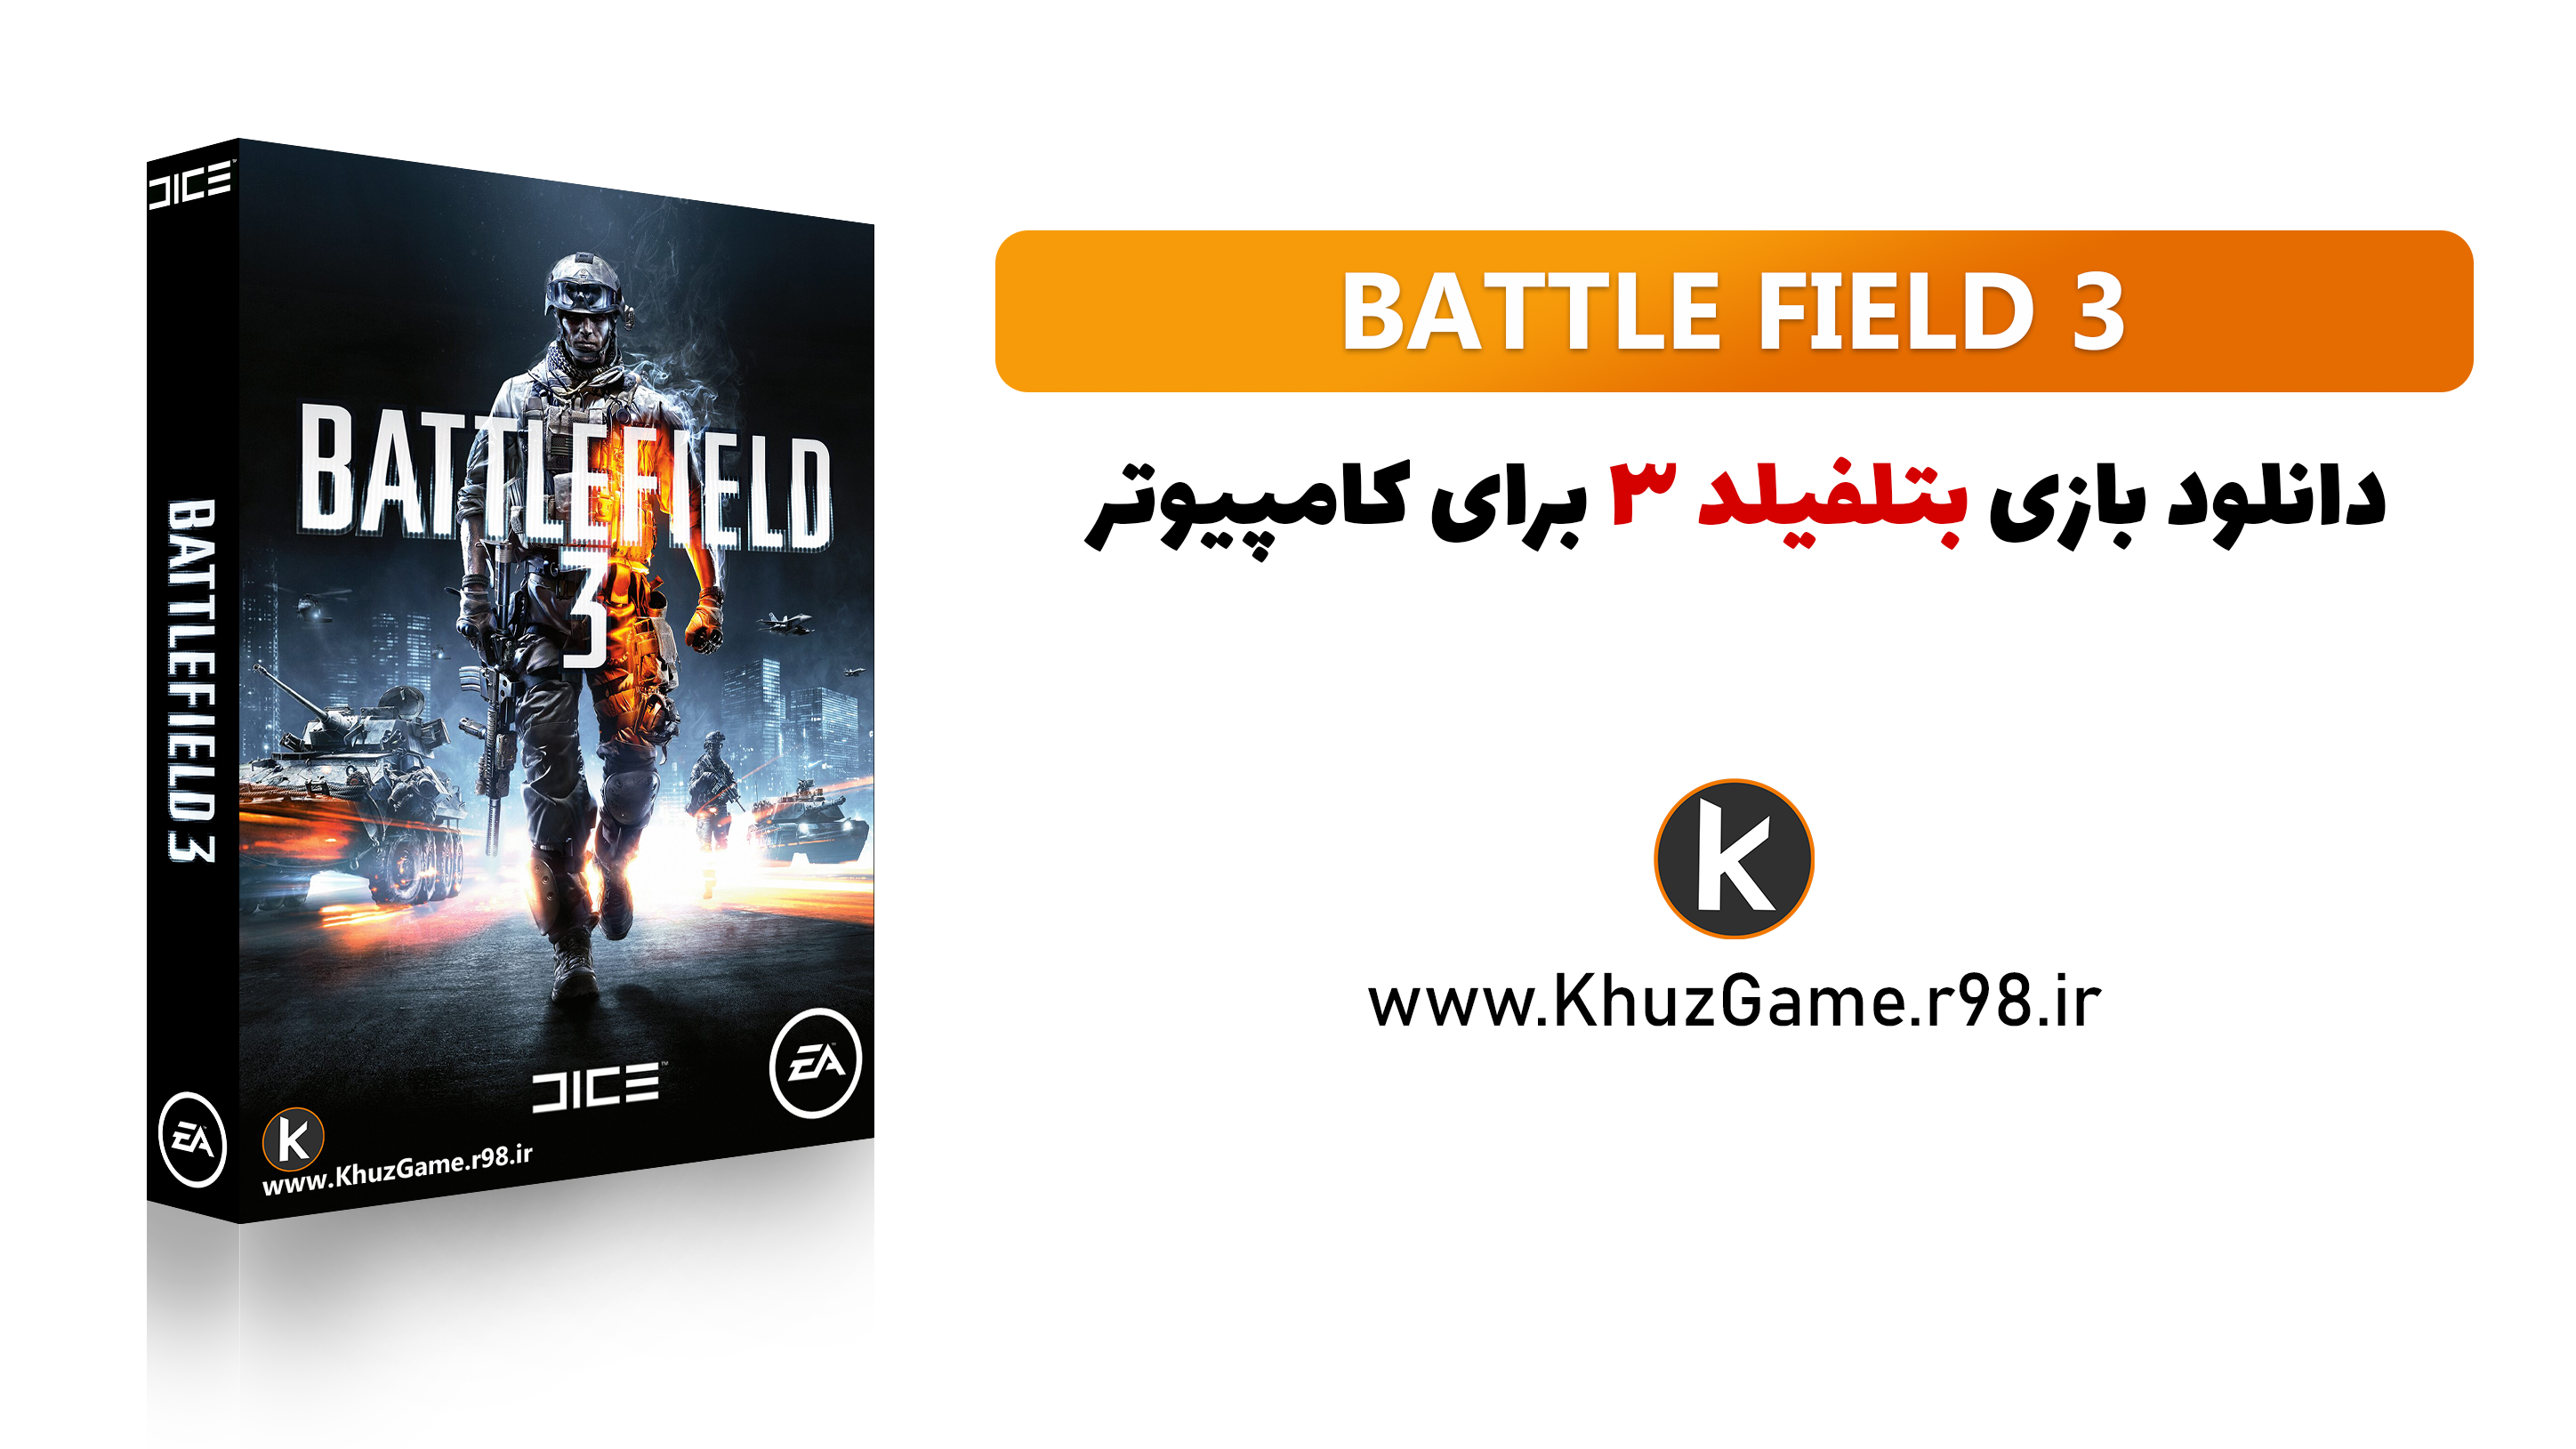 Battlefield 3 free for PC | دانلوود بازی بتلفیلد 3 برای کامپیوتر